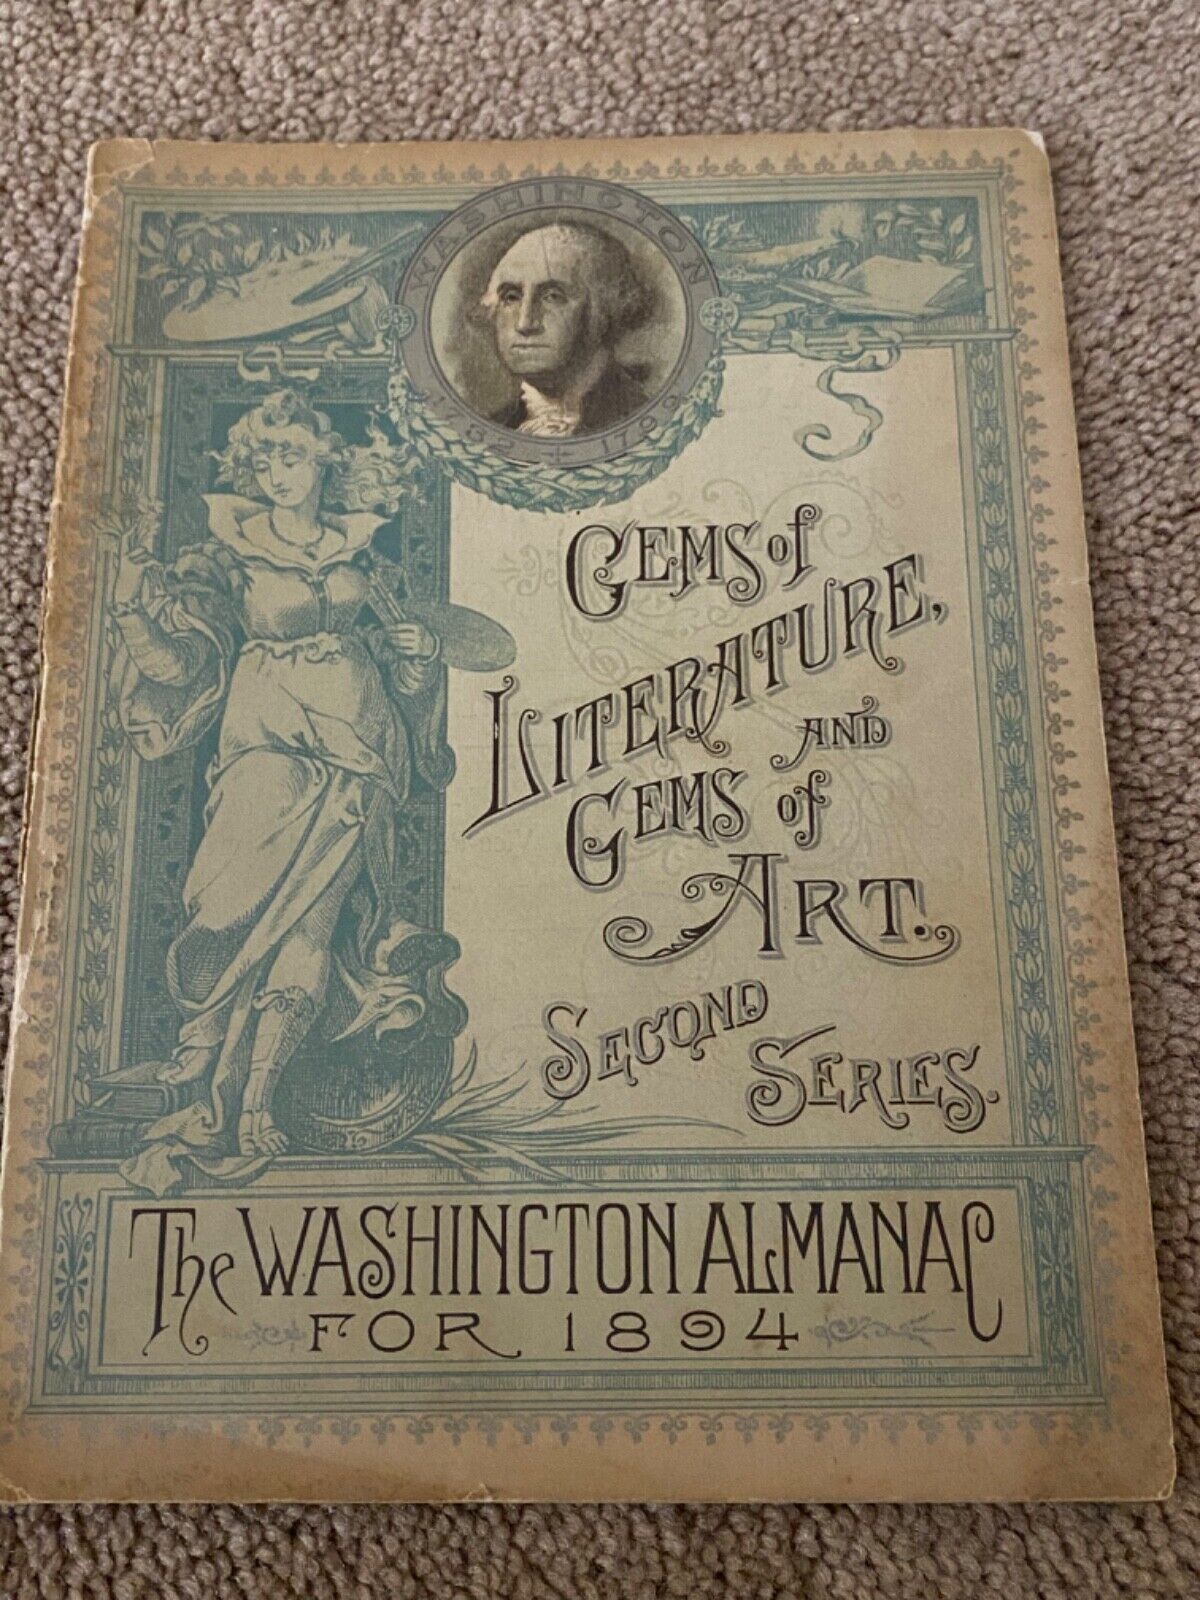 RARE VTG. 1894 Washington Life Almanac Gems of Literature and Art second series